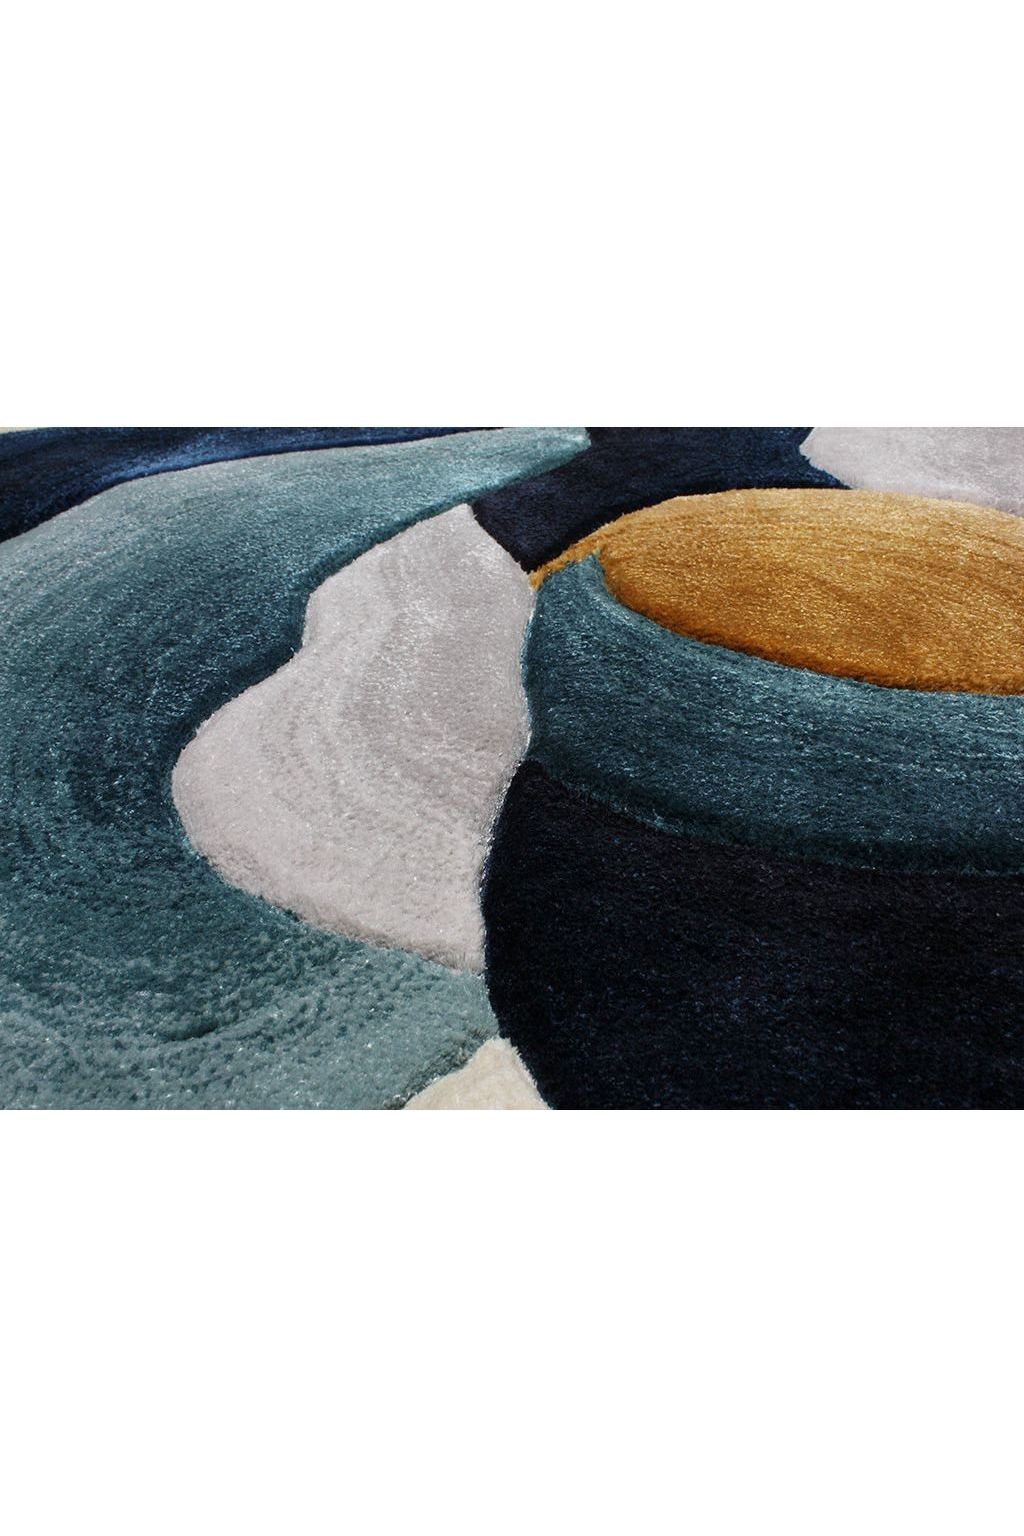 #Turkish_Carpets_Rugs# #Modern_Carpets# #Abrash_Carpets#Cell 001-Y